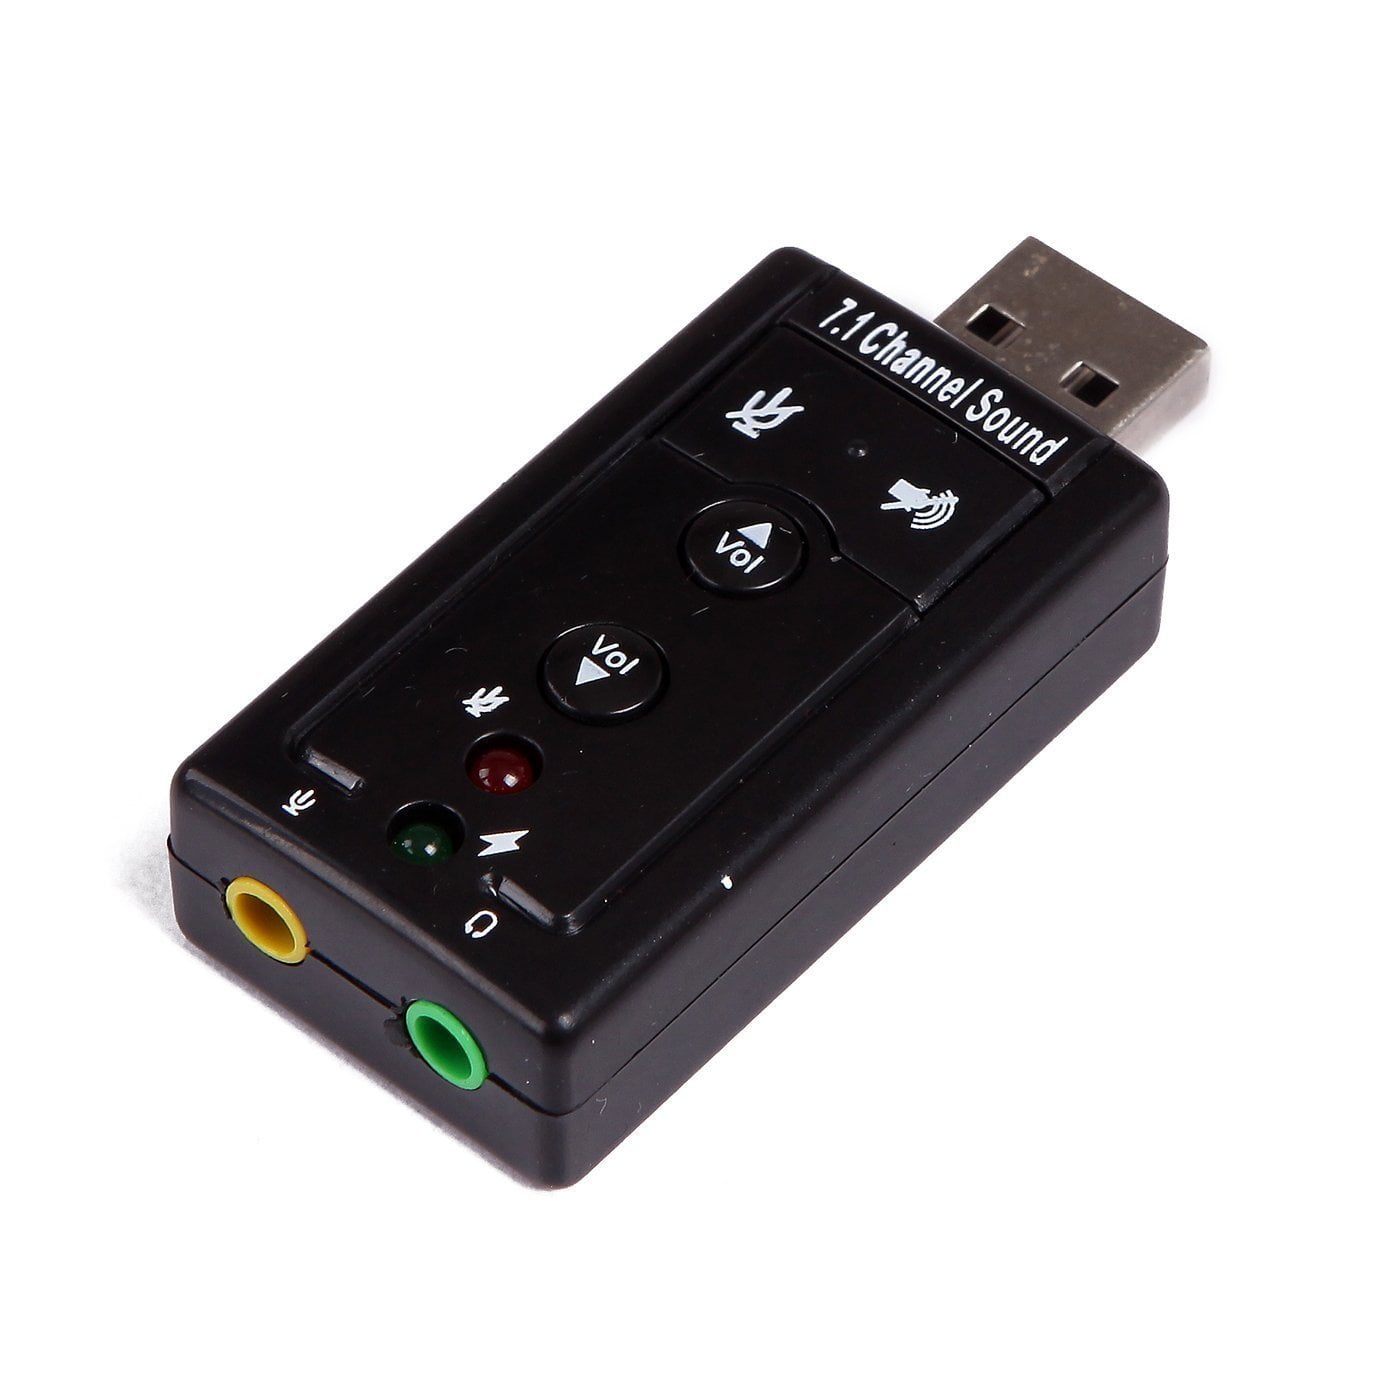 Zinniaya HOT SALENEW PC Desktop USB 2.0 3D Virtual Channel Audio Sound Card Adapter For Windows 7,IN STOCK